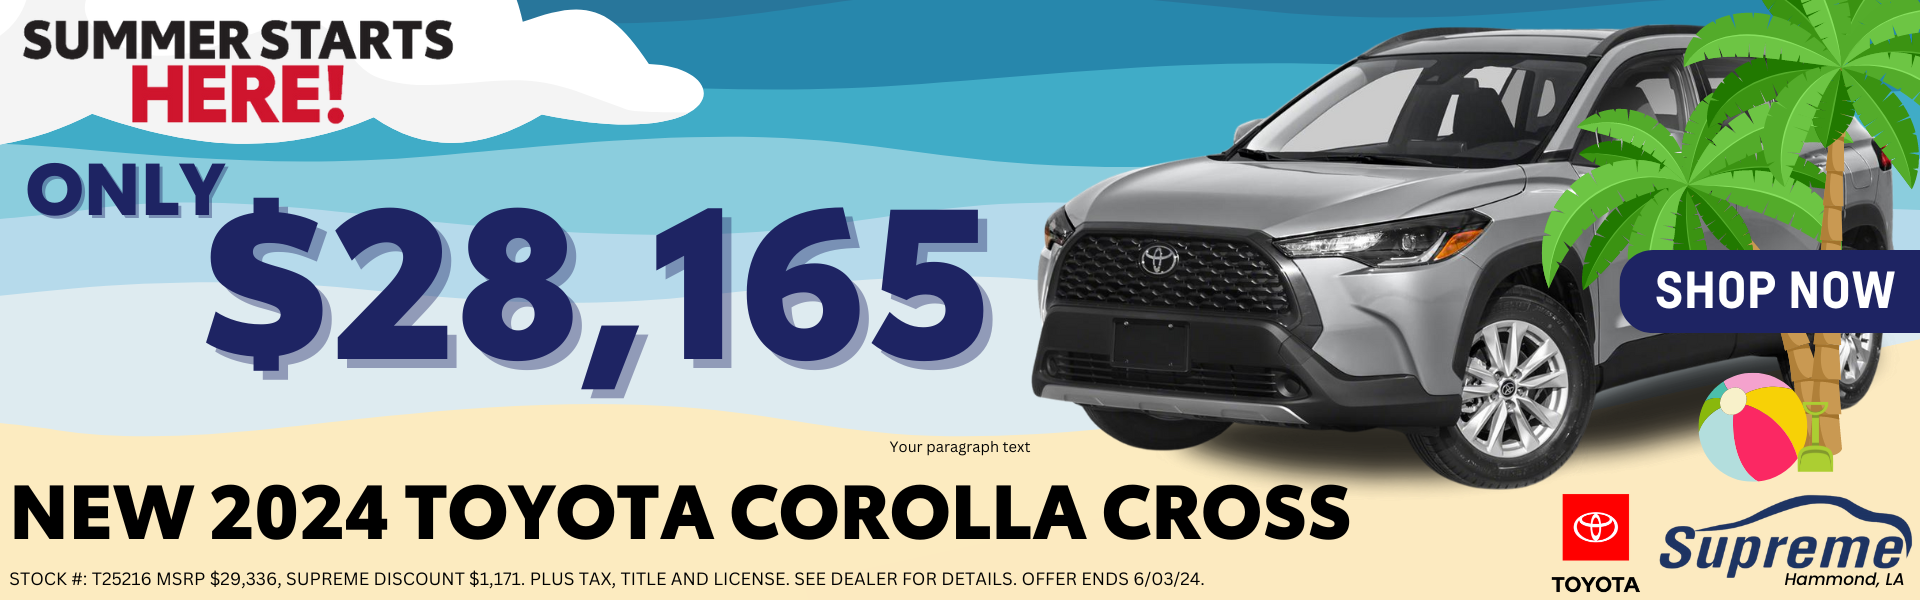 2024 Corolla Cross only $28,165